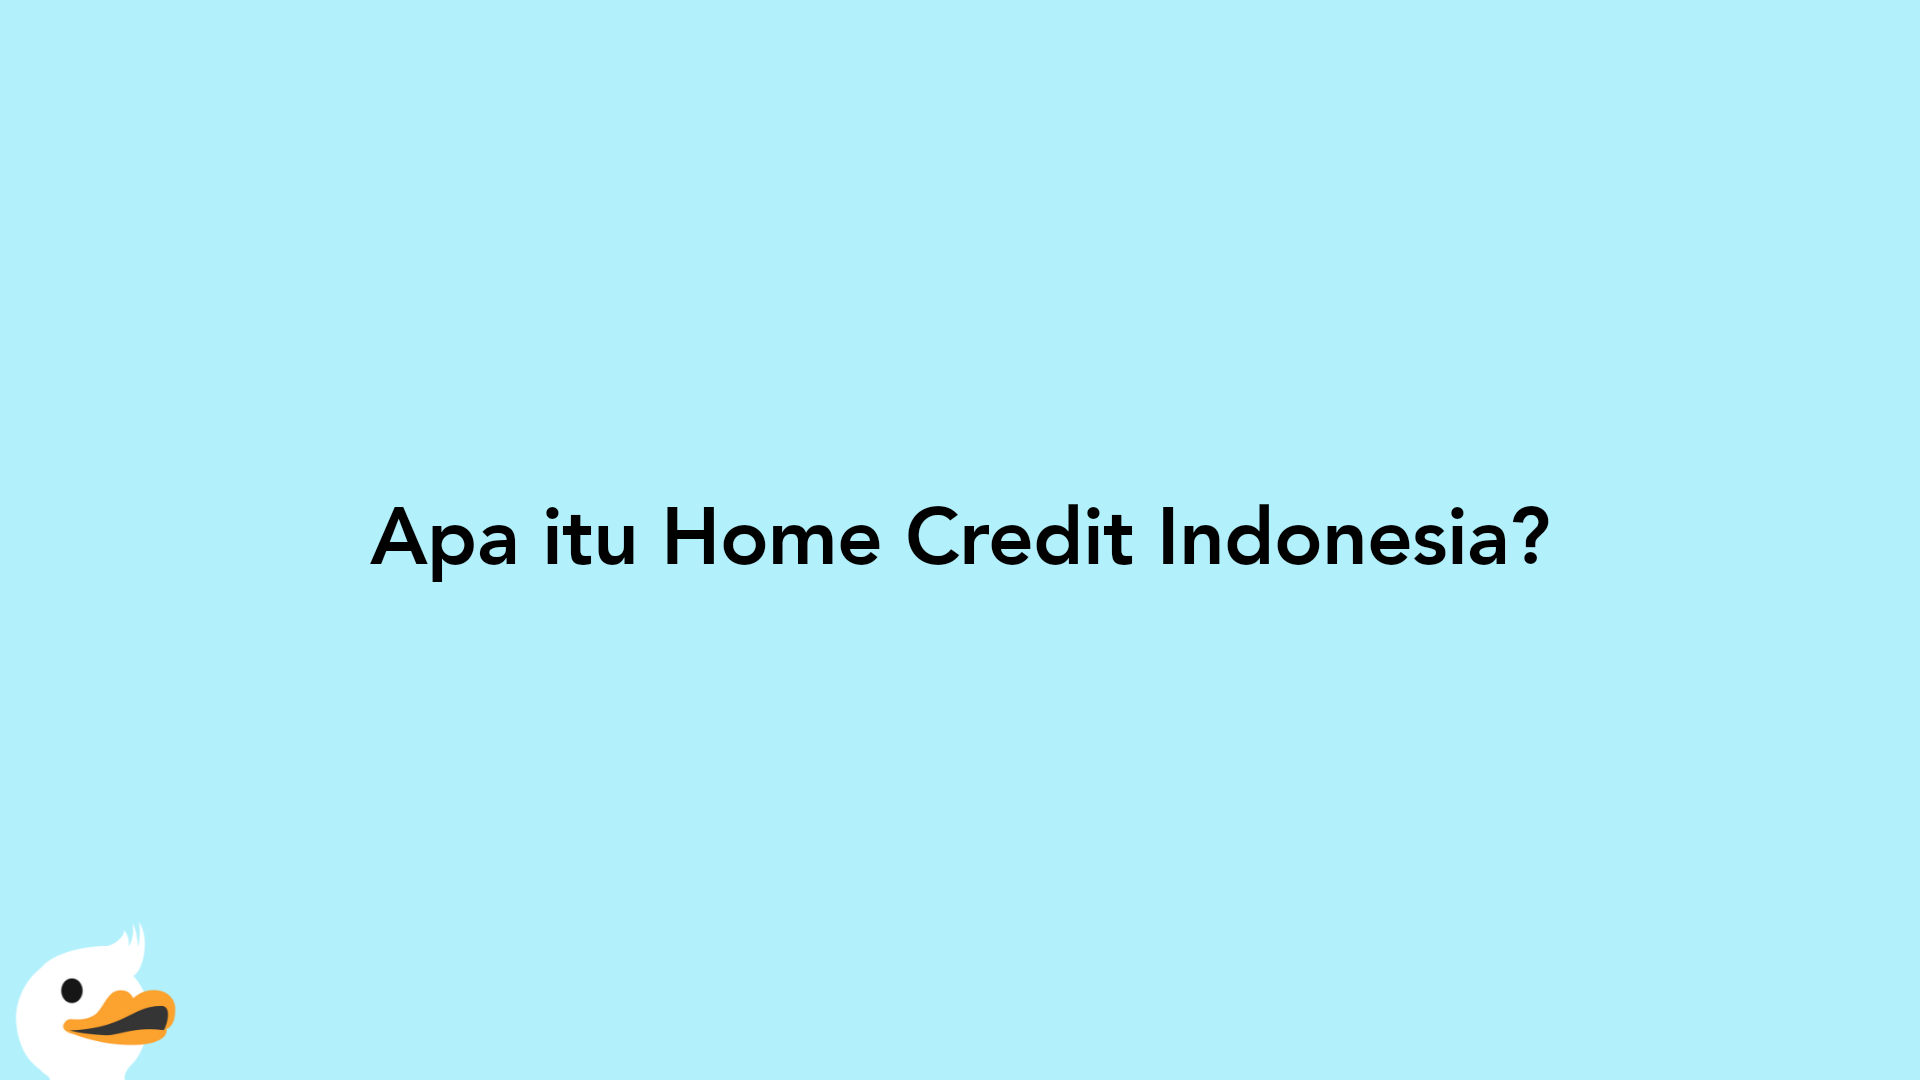 Apa itu Home Credit Indonesia?